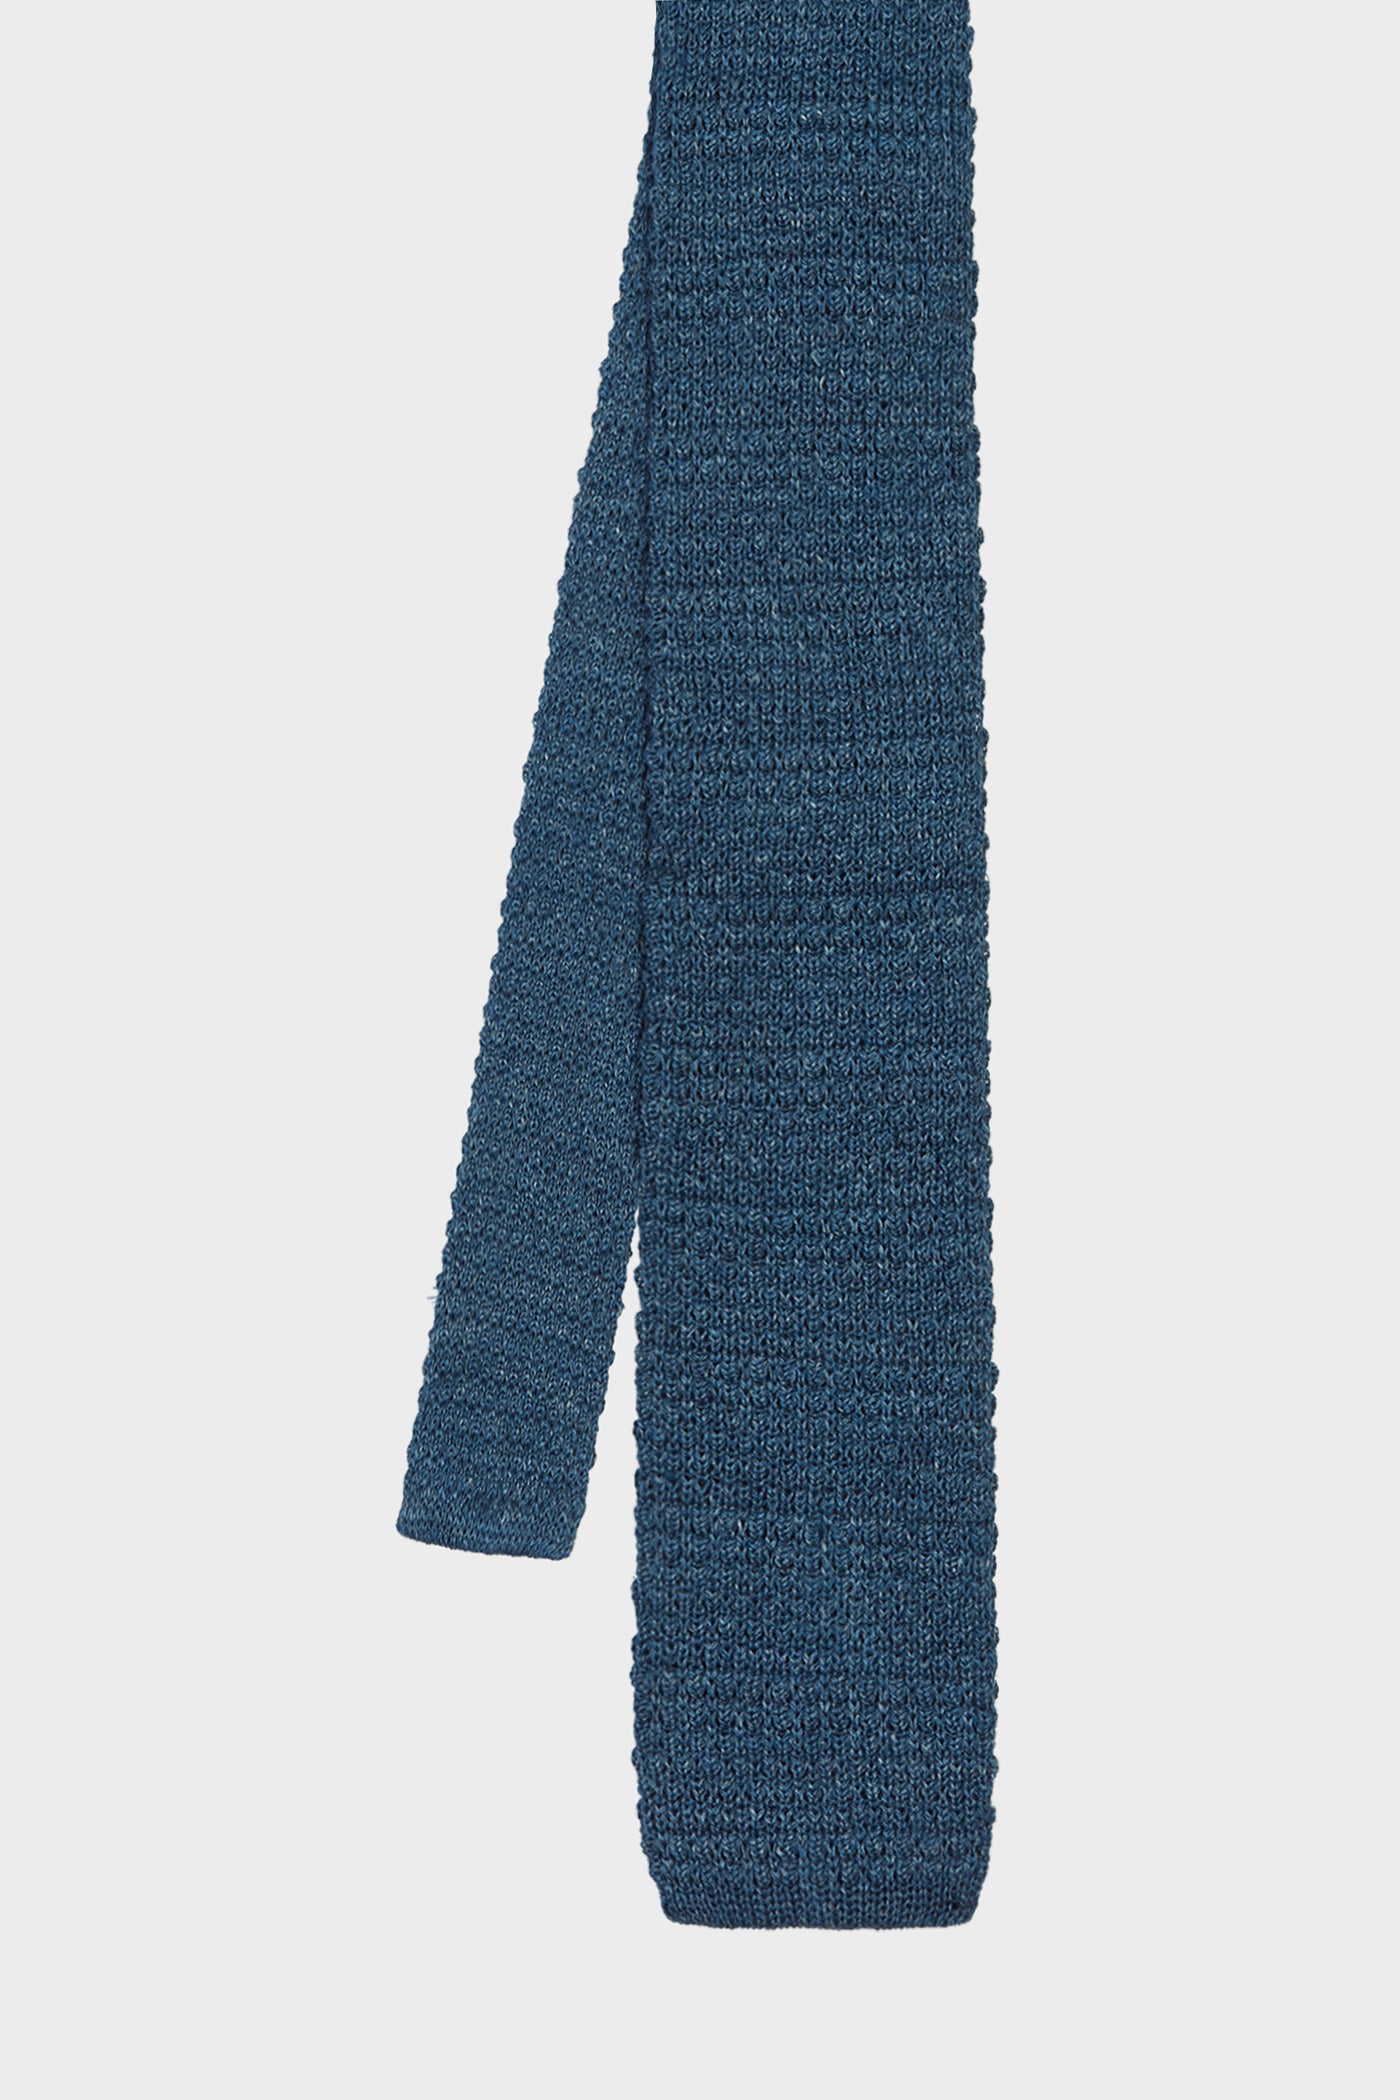 Cravate Urbino Bleu